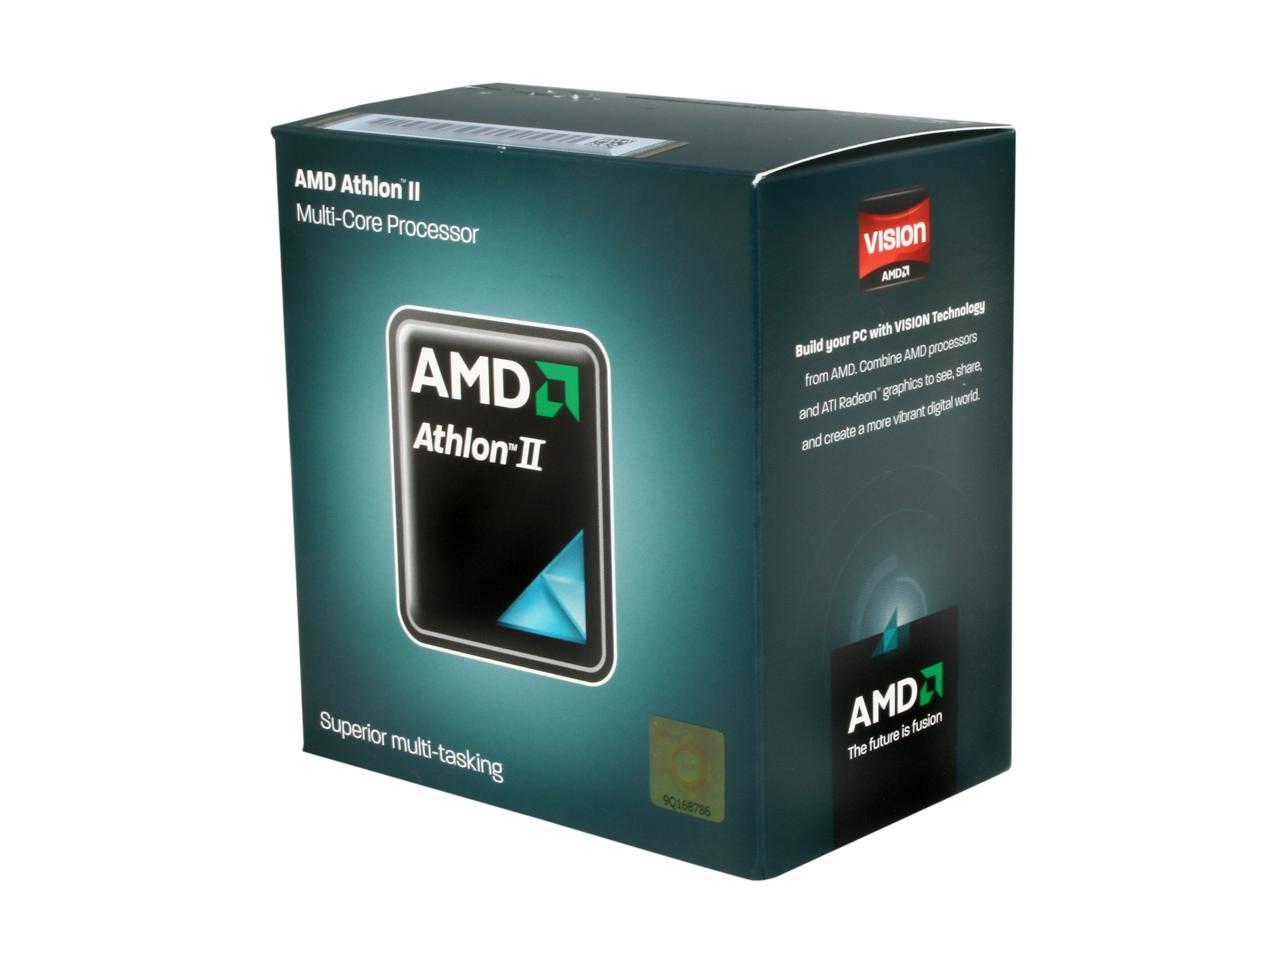 AMD Athlon II X4 635 Propus Quad-Core 2.9 GHz Socket AM3 95W ADX635WFGIBOX Desktop Processor